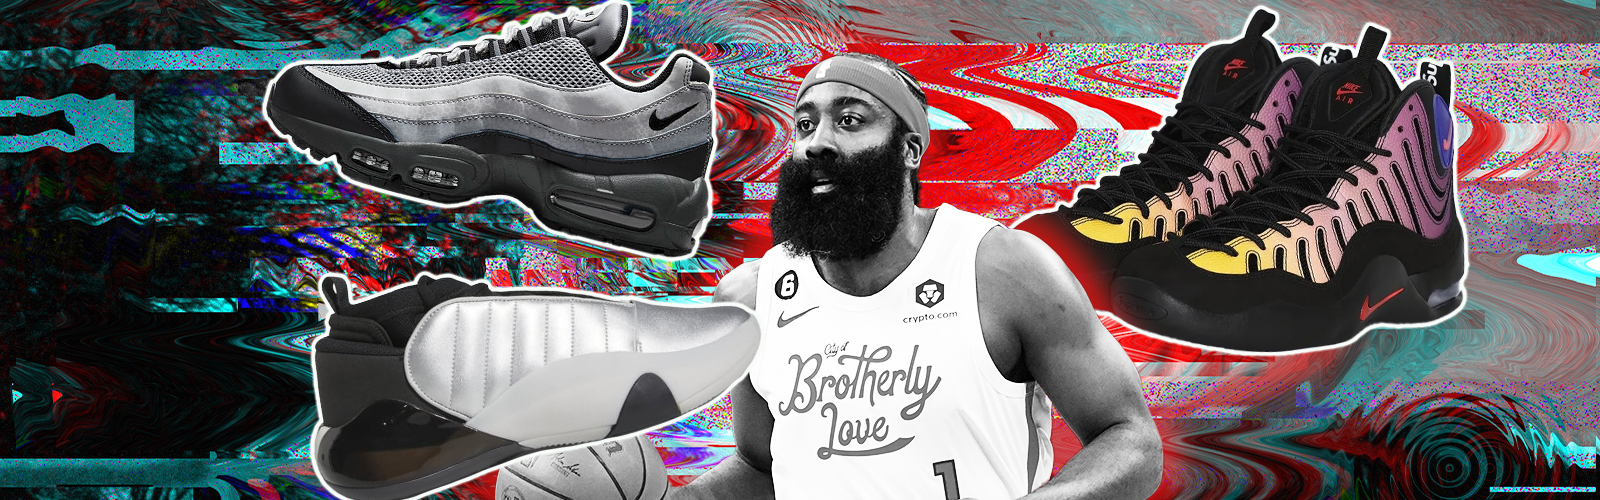 The Week's Best Sneakers, Featuring Supreme x Nike Air Bakin